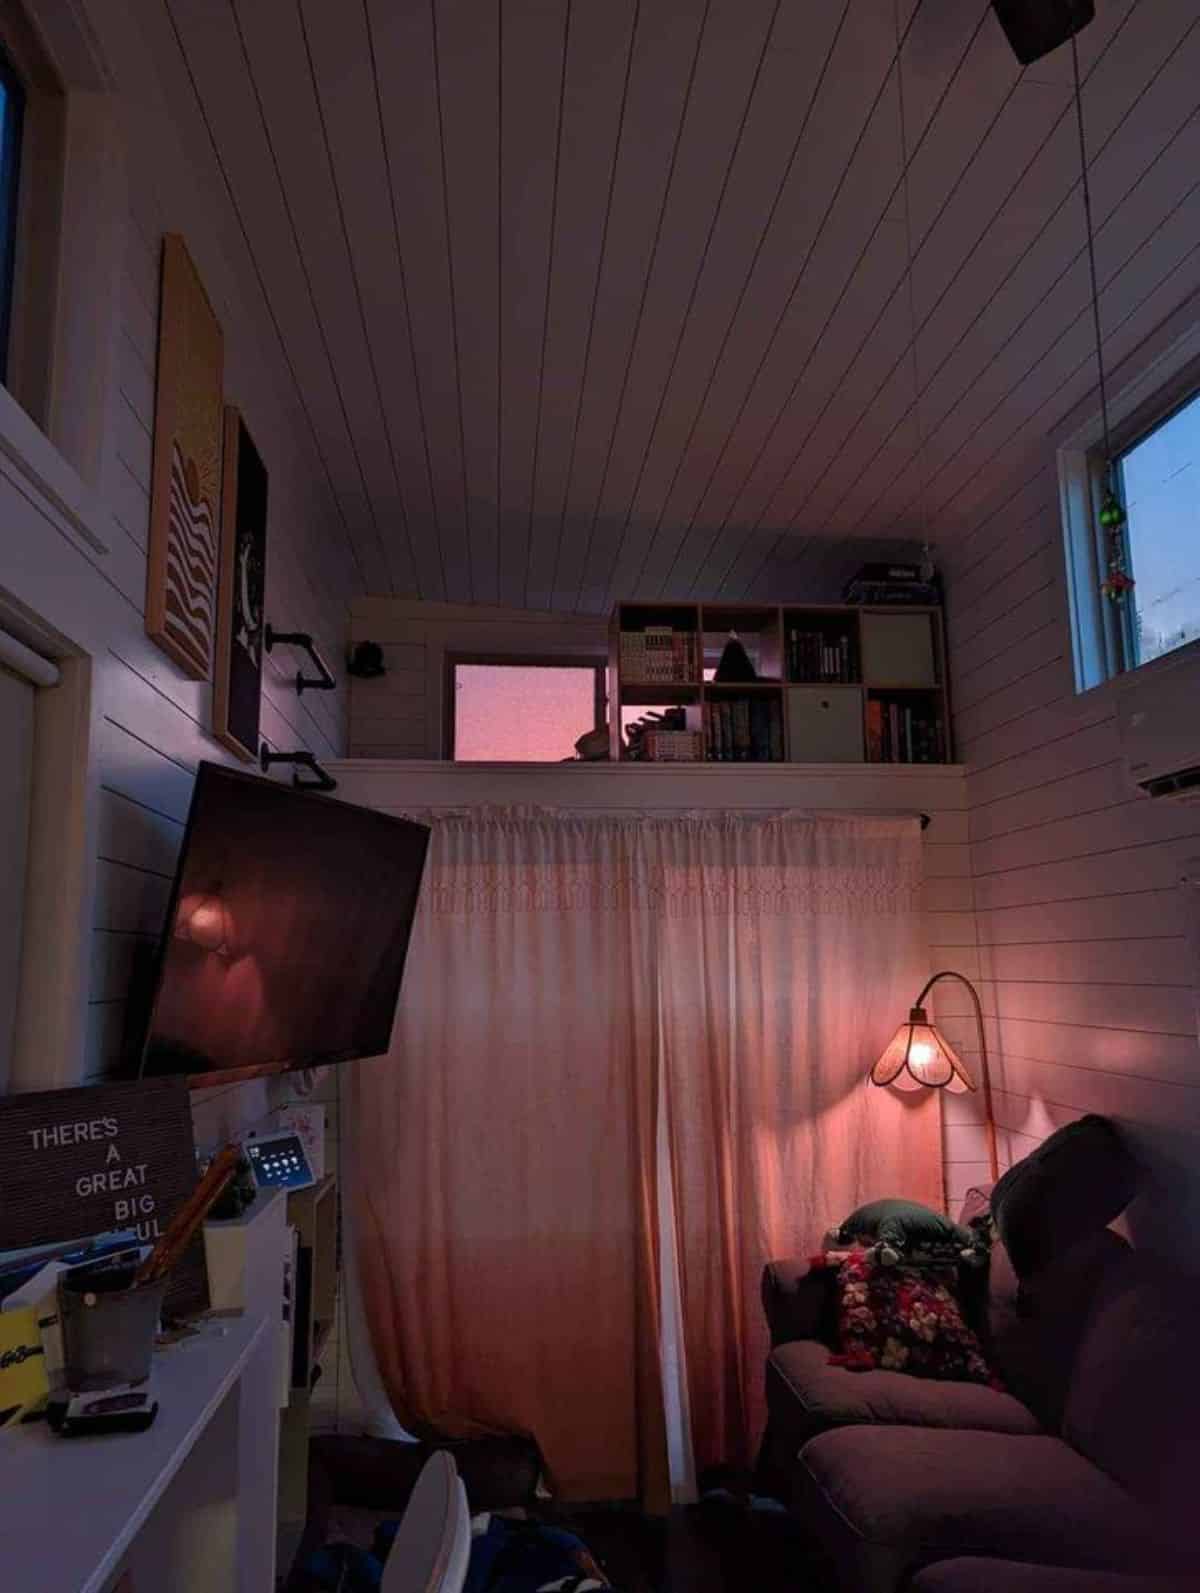 interiors of custom built tiny home at night